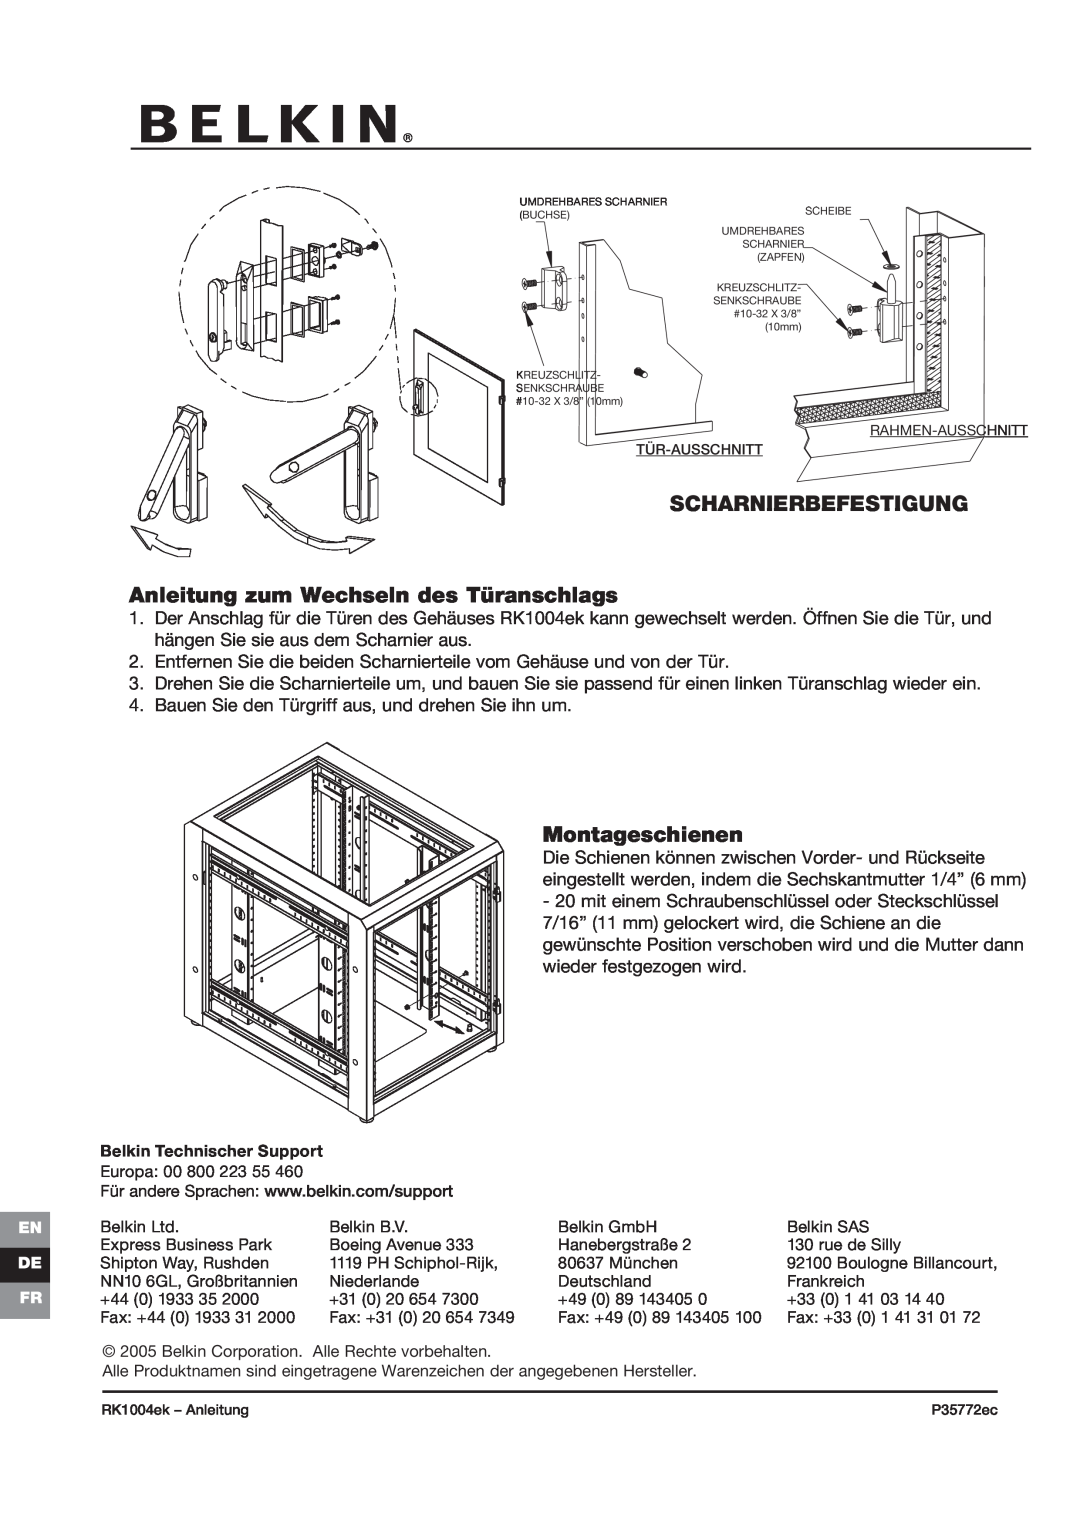 Belkin RK1004ek, P35772ec manual SCHARNIERBEFESTIGUNG Anleitung zum Wechseln des Türanschlags, Montageschienen 